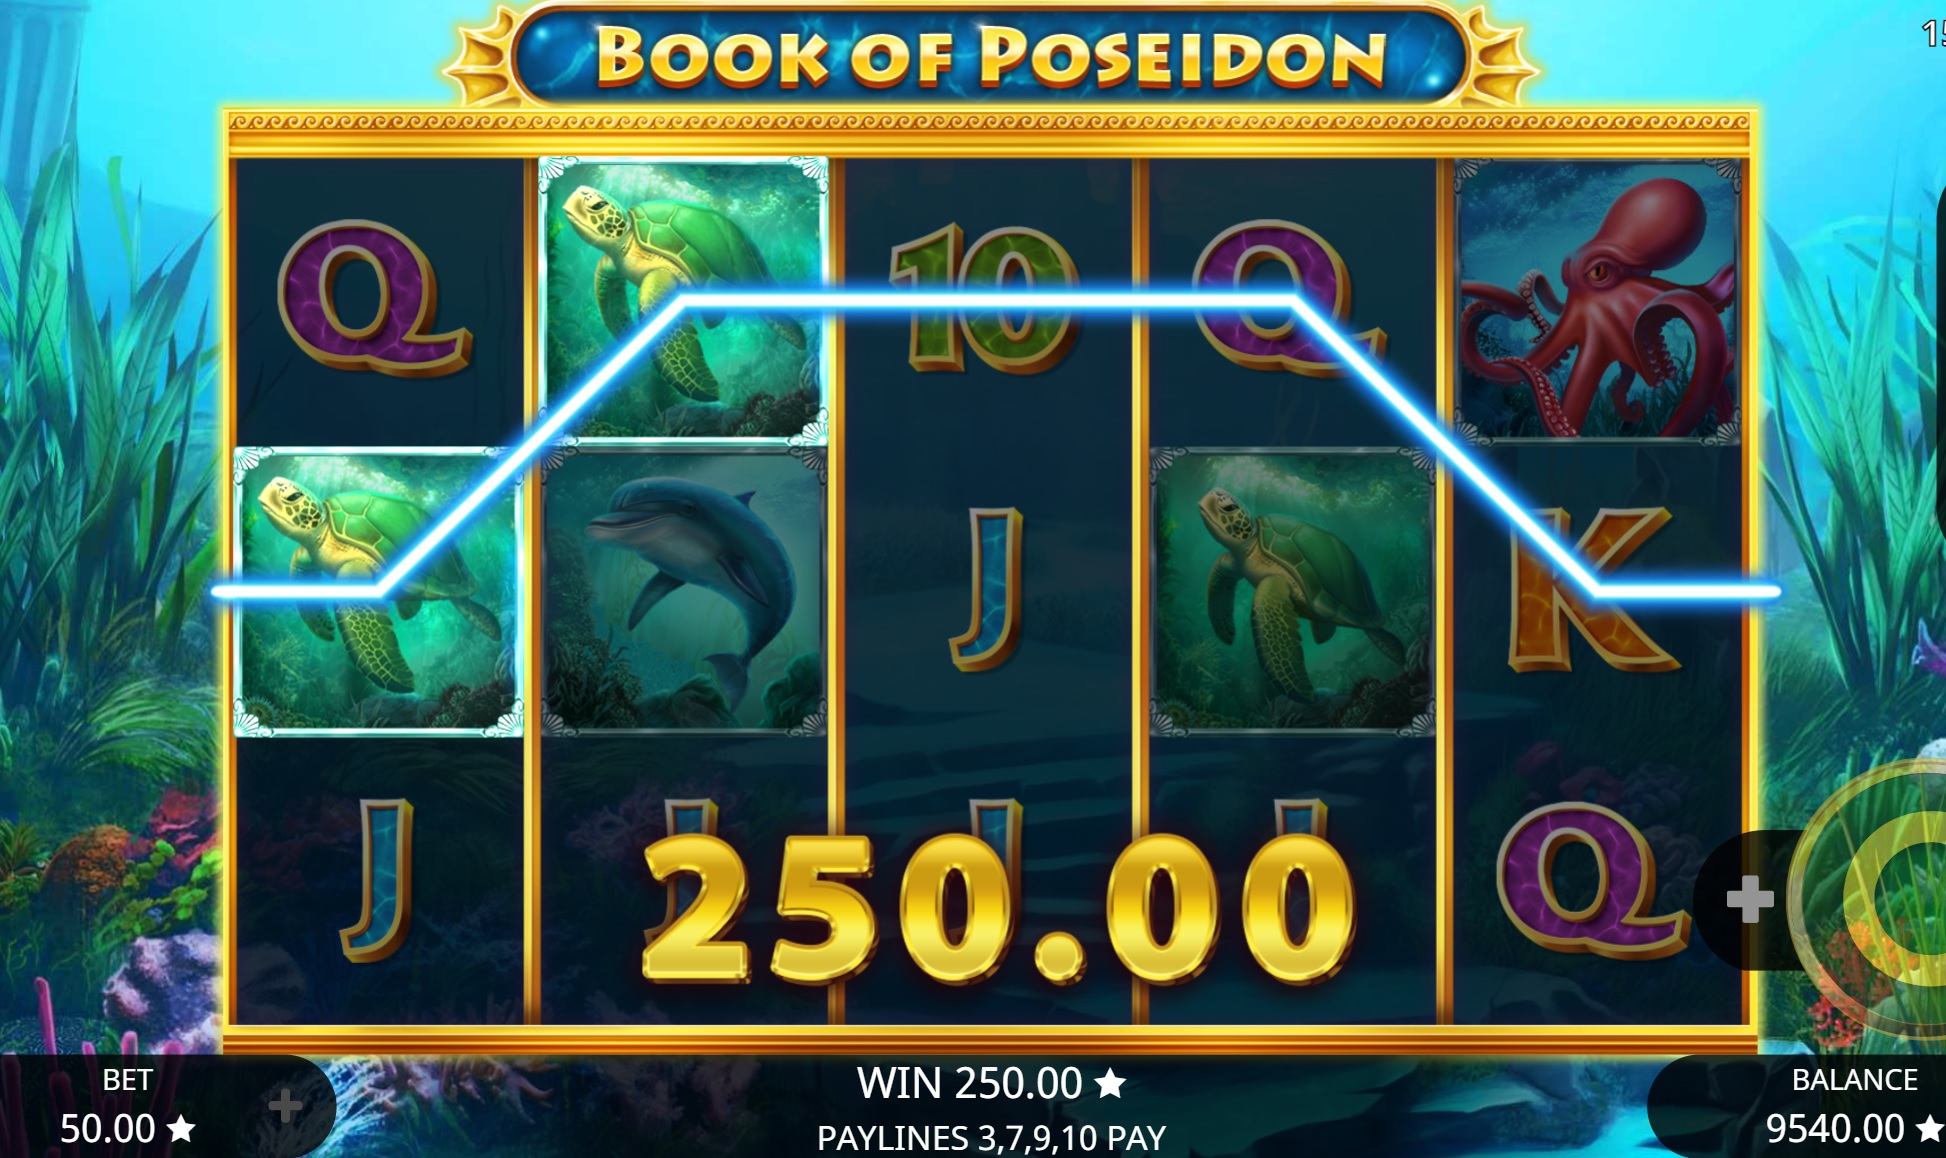 Play Book of Poseidon slot